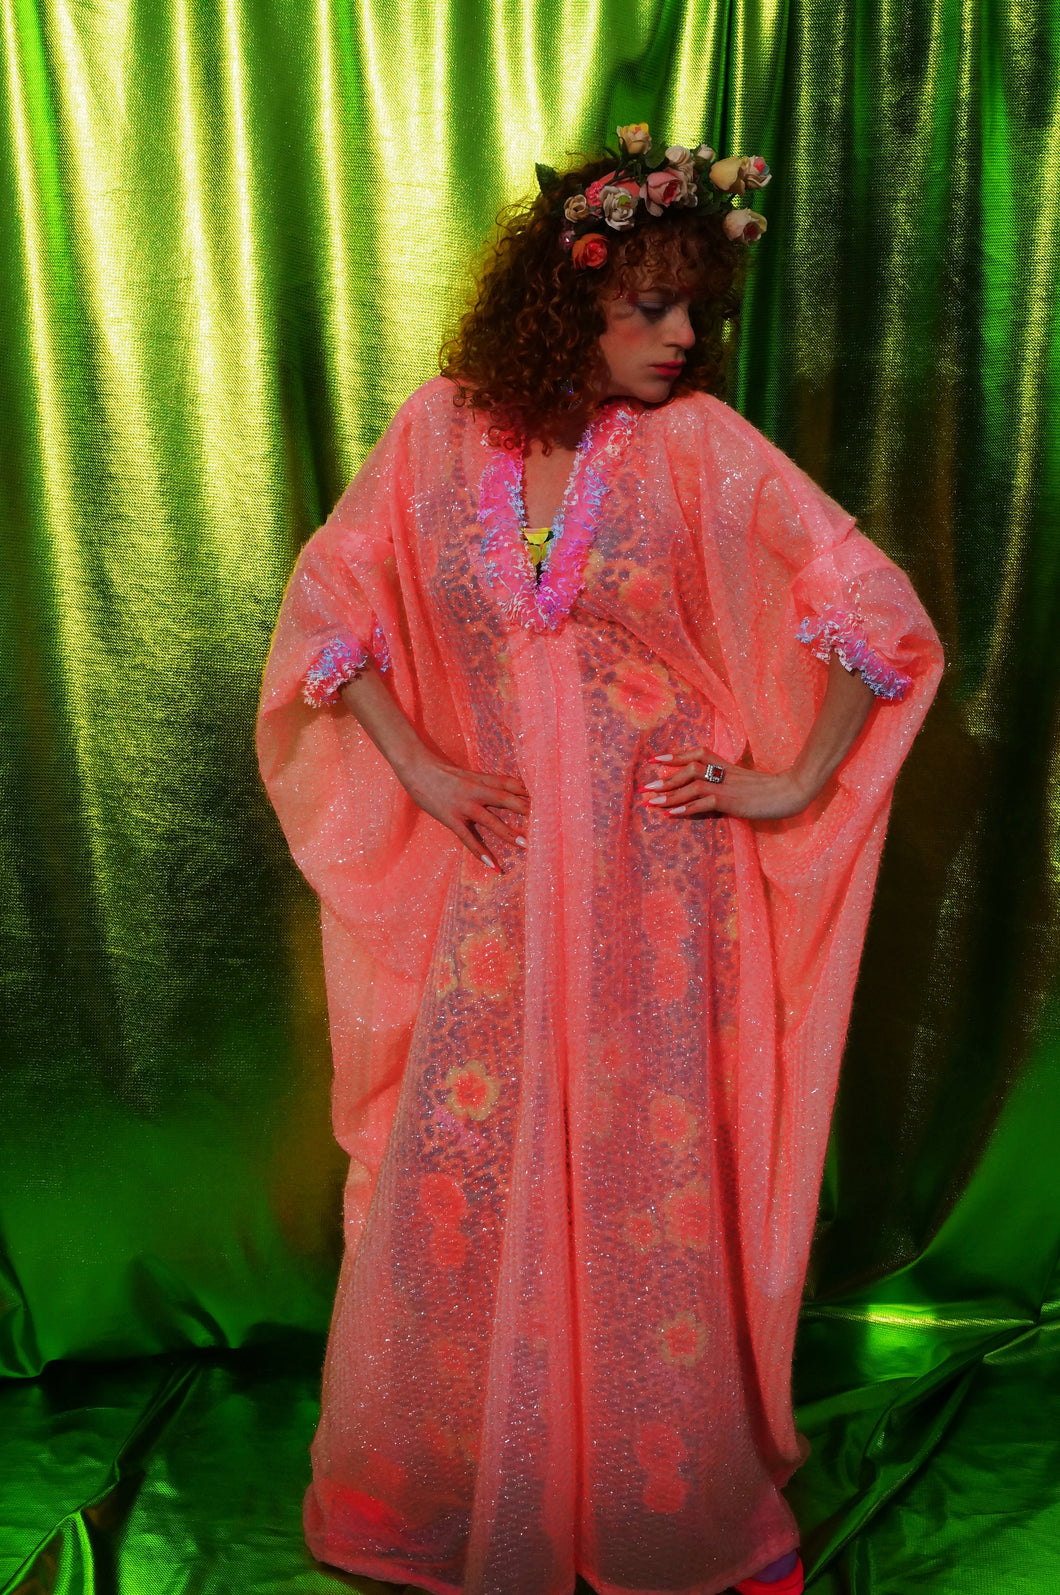 Pale Pink Sheer lurex kaftan dress with frilly trim